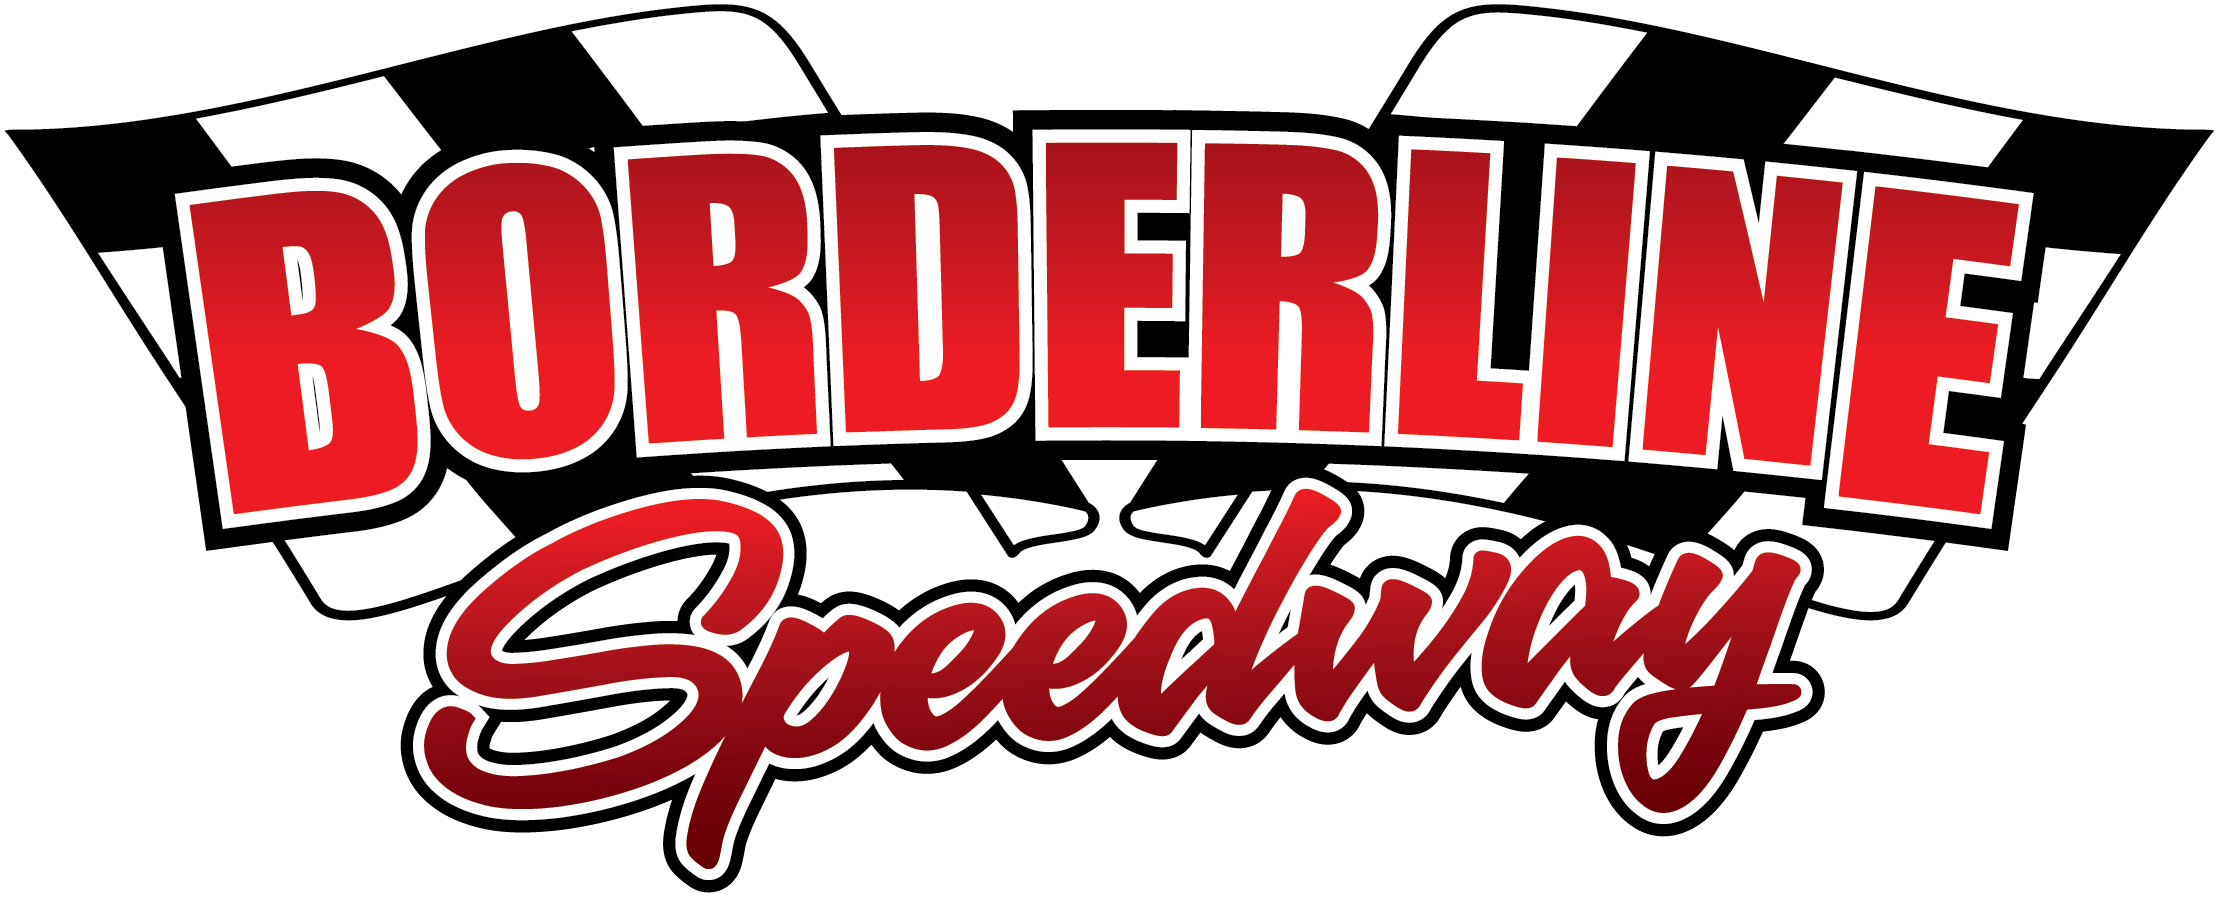 Borderline_Speedway_logo_2015.png